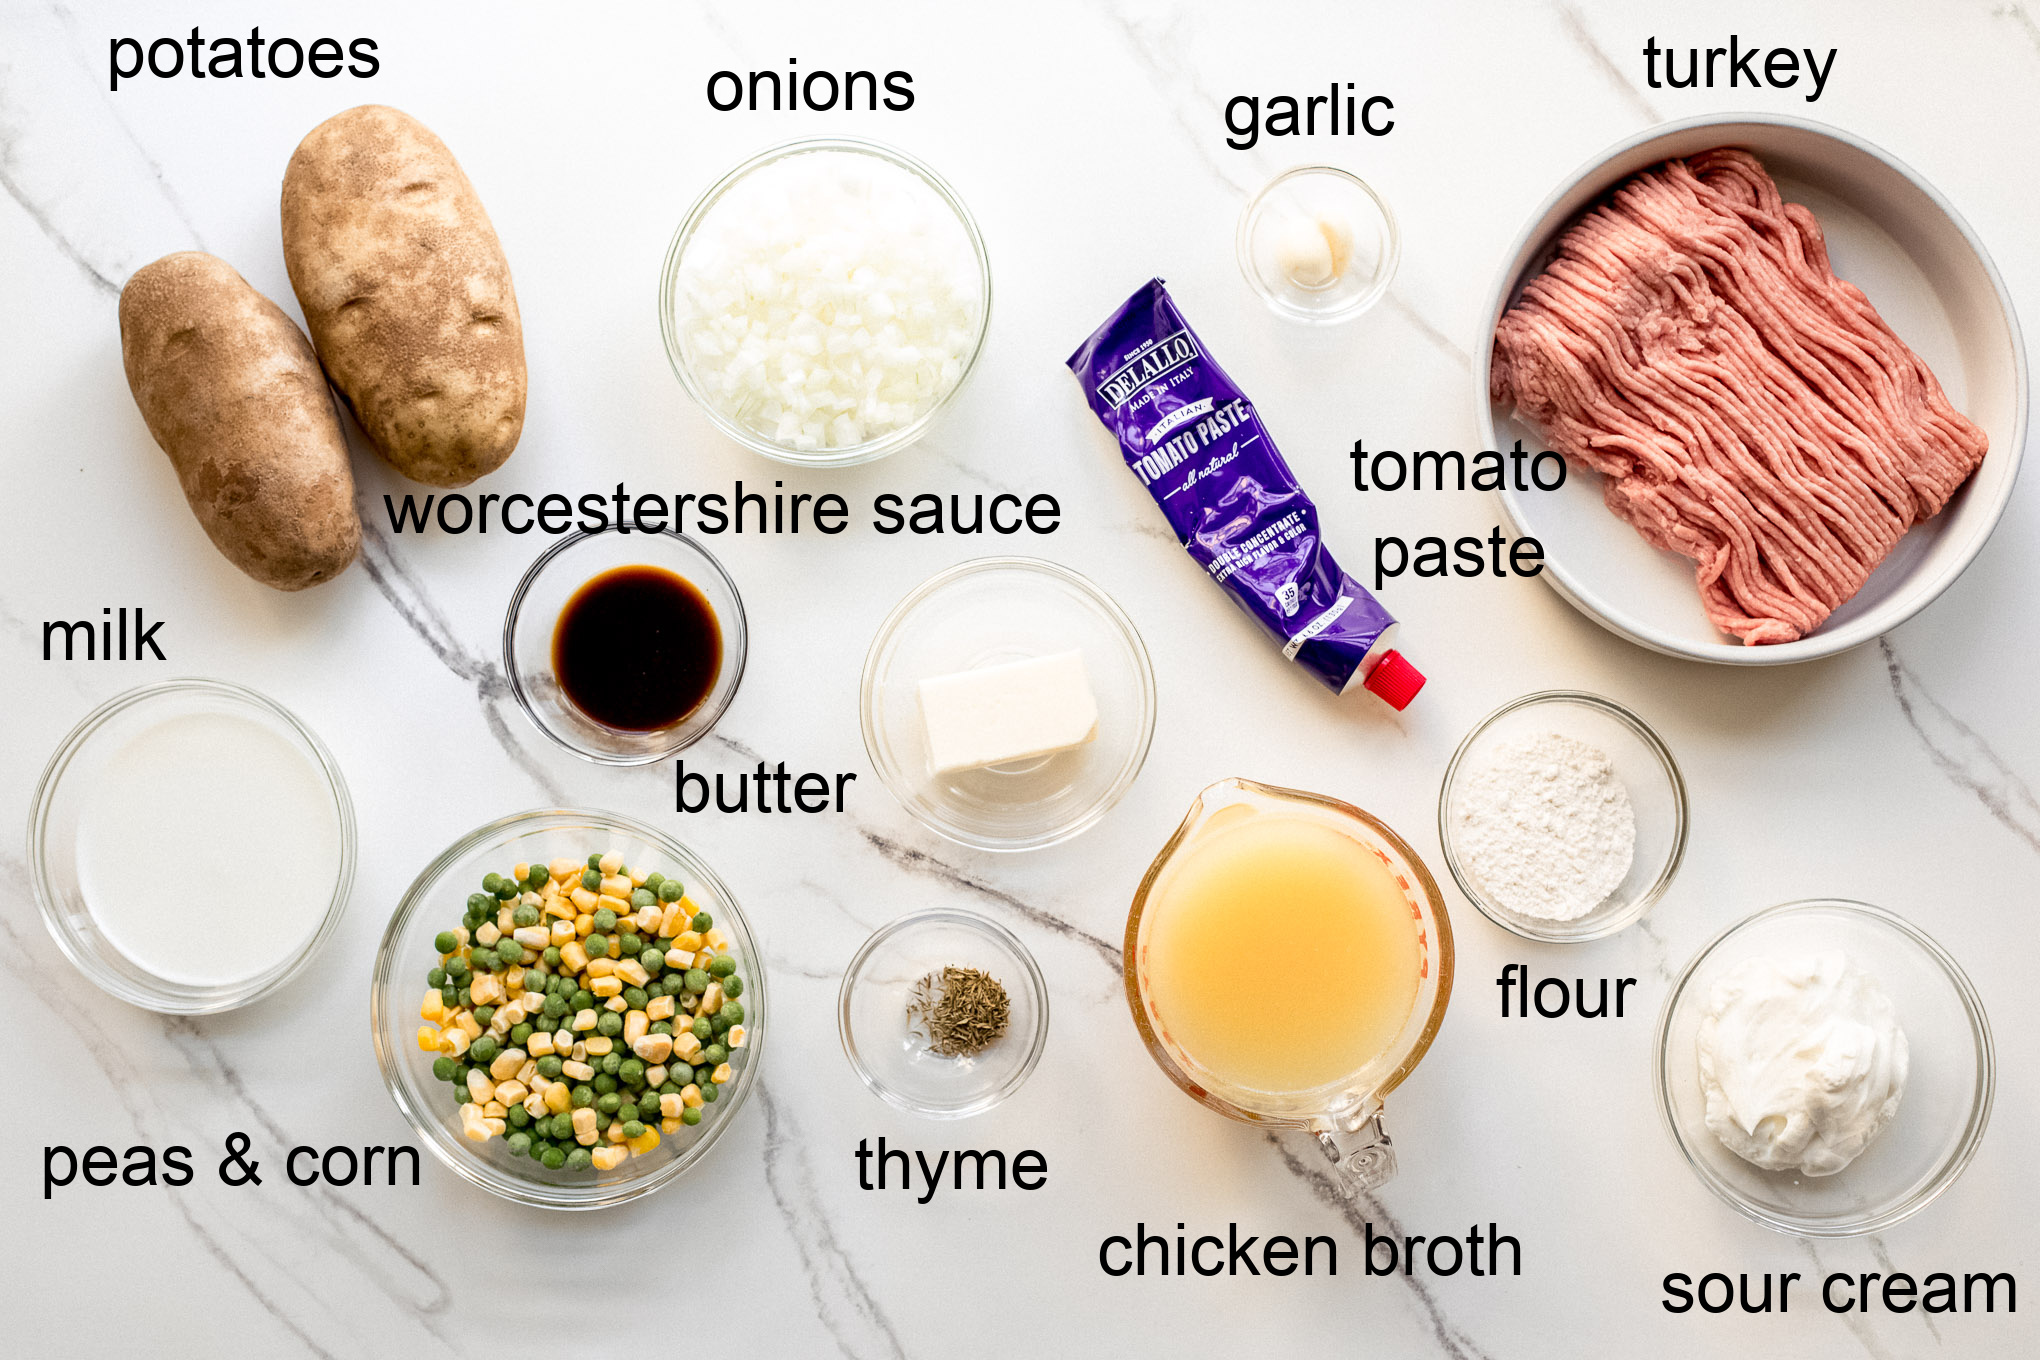 ingredients for shepherd's pie with turkey.